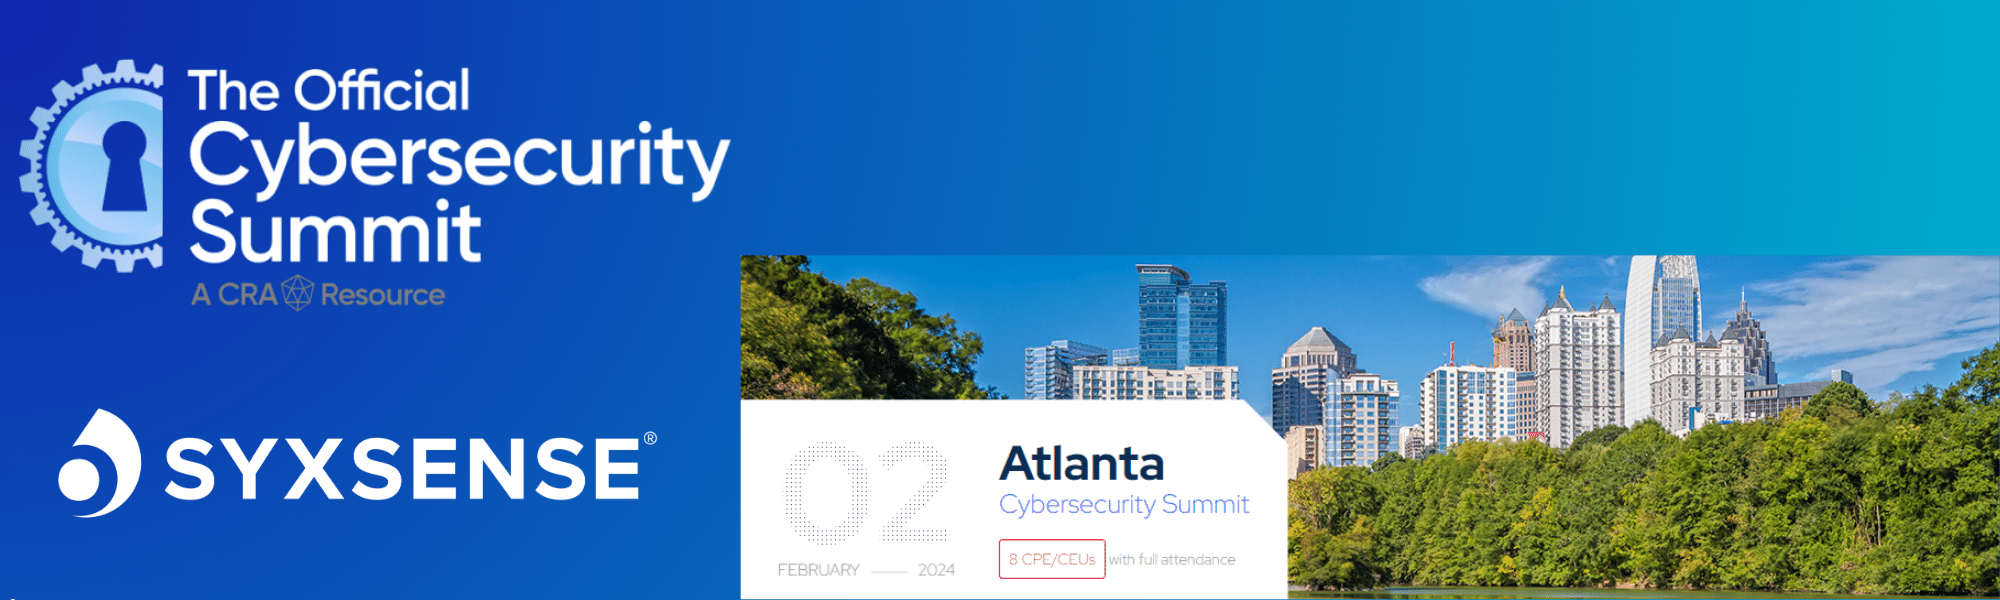 The Official Cybersecurity Summit | Atlanta, GA